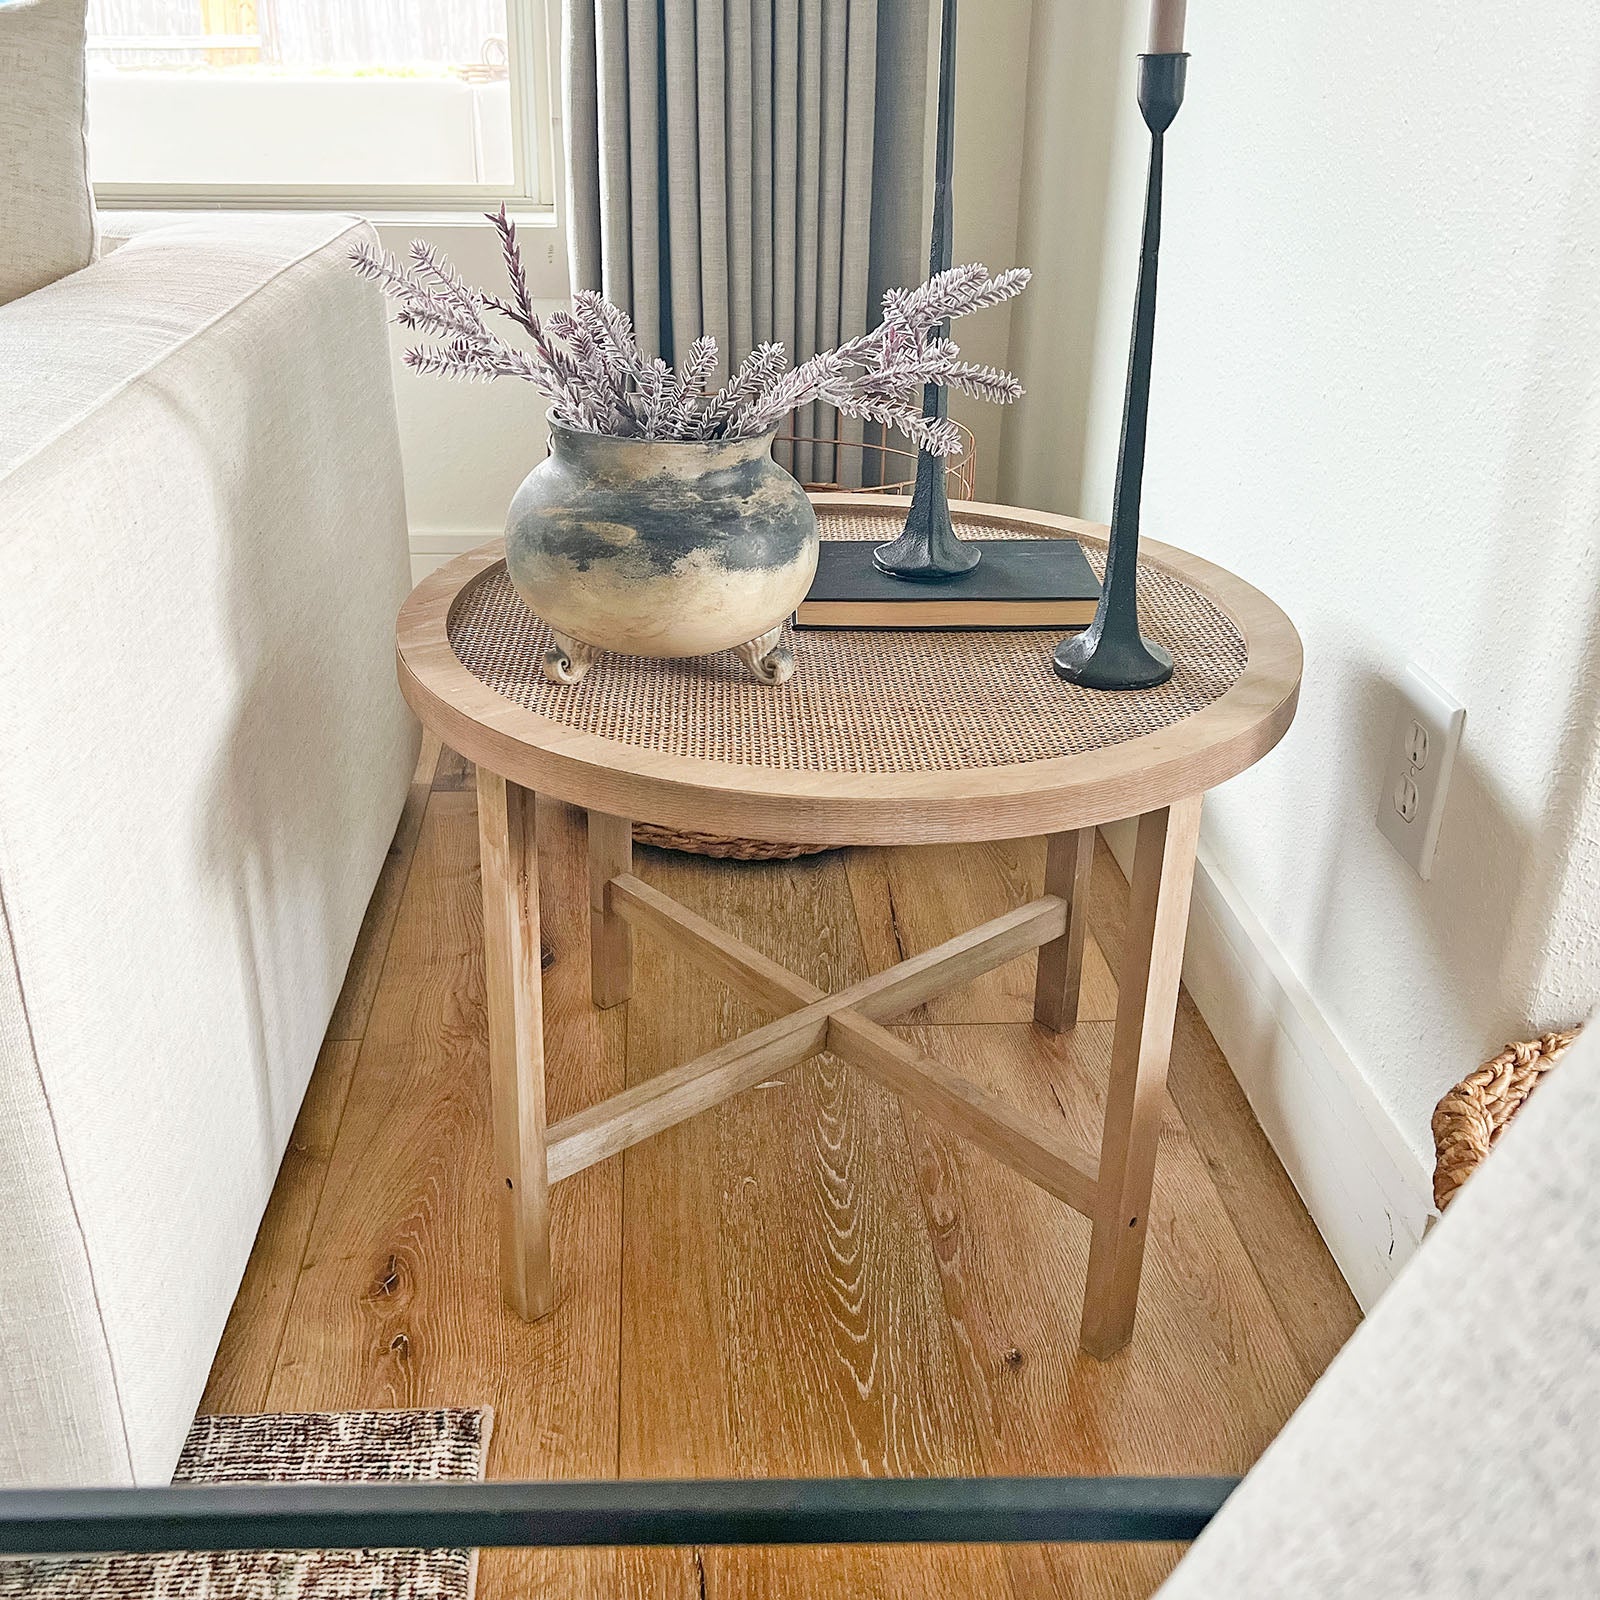 PHI VILLA Rattan Side Table, Wood Frame End Table for Living Room